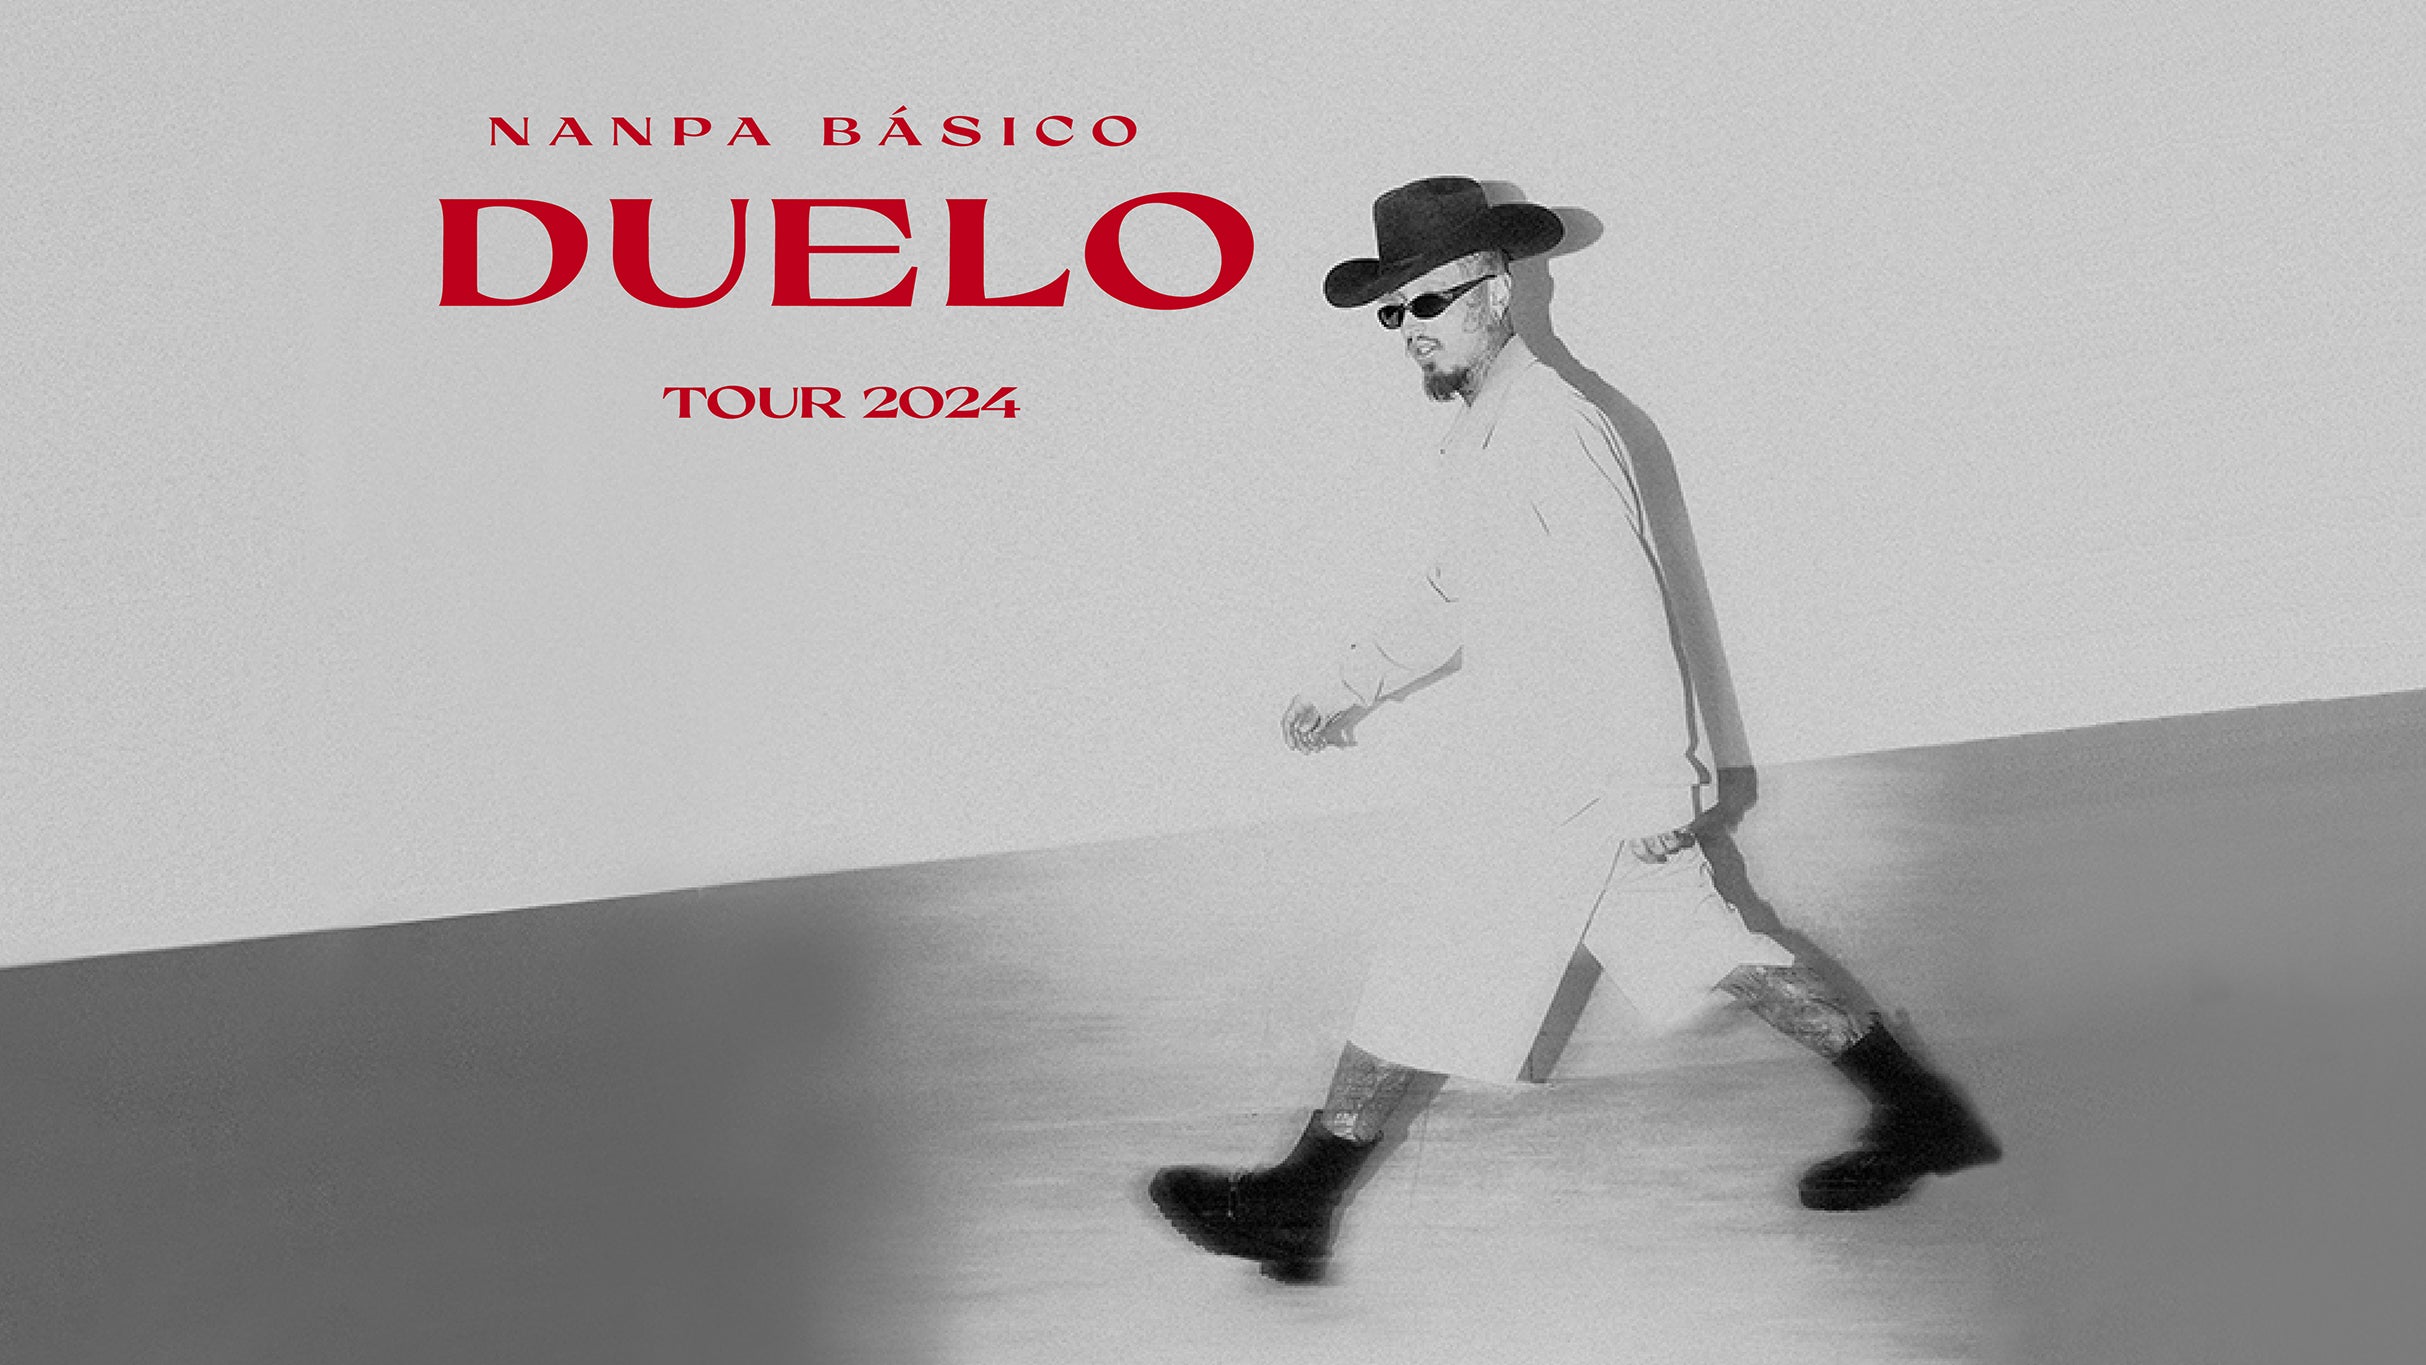 Nanpa Básico- Duelo Tour 2024 in Zapopan promo photo for Preventa Citibanamex presale offer code